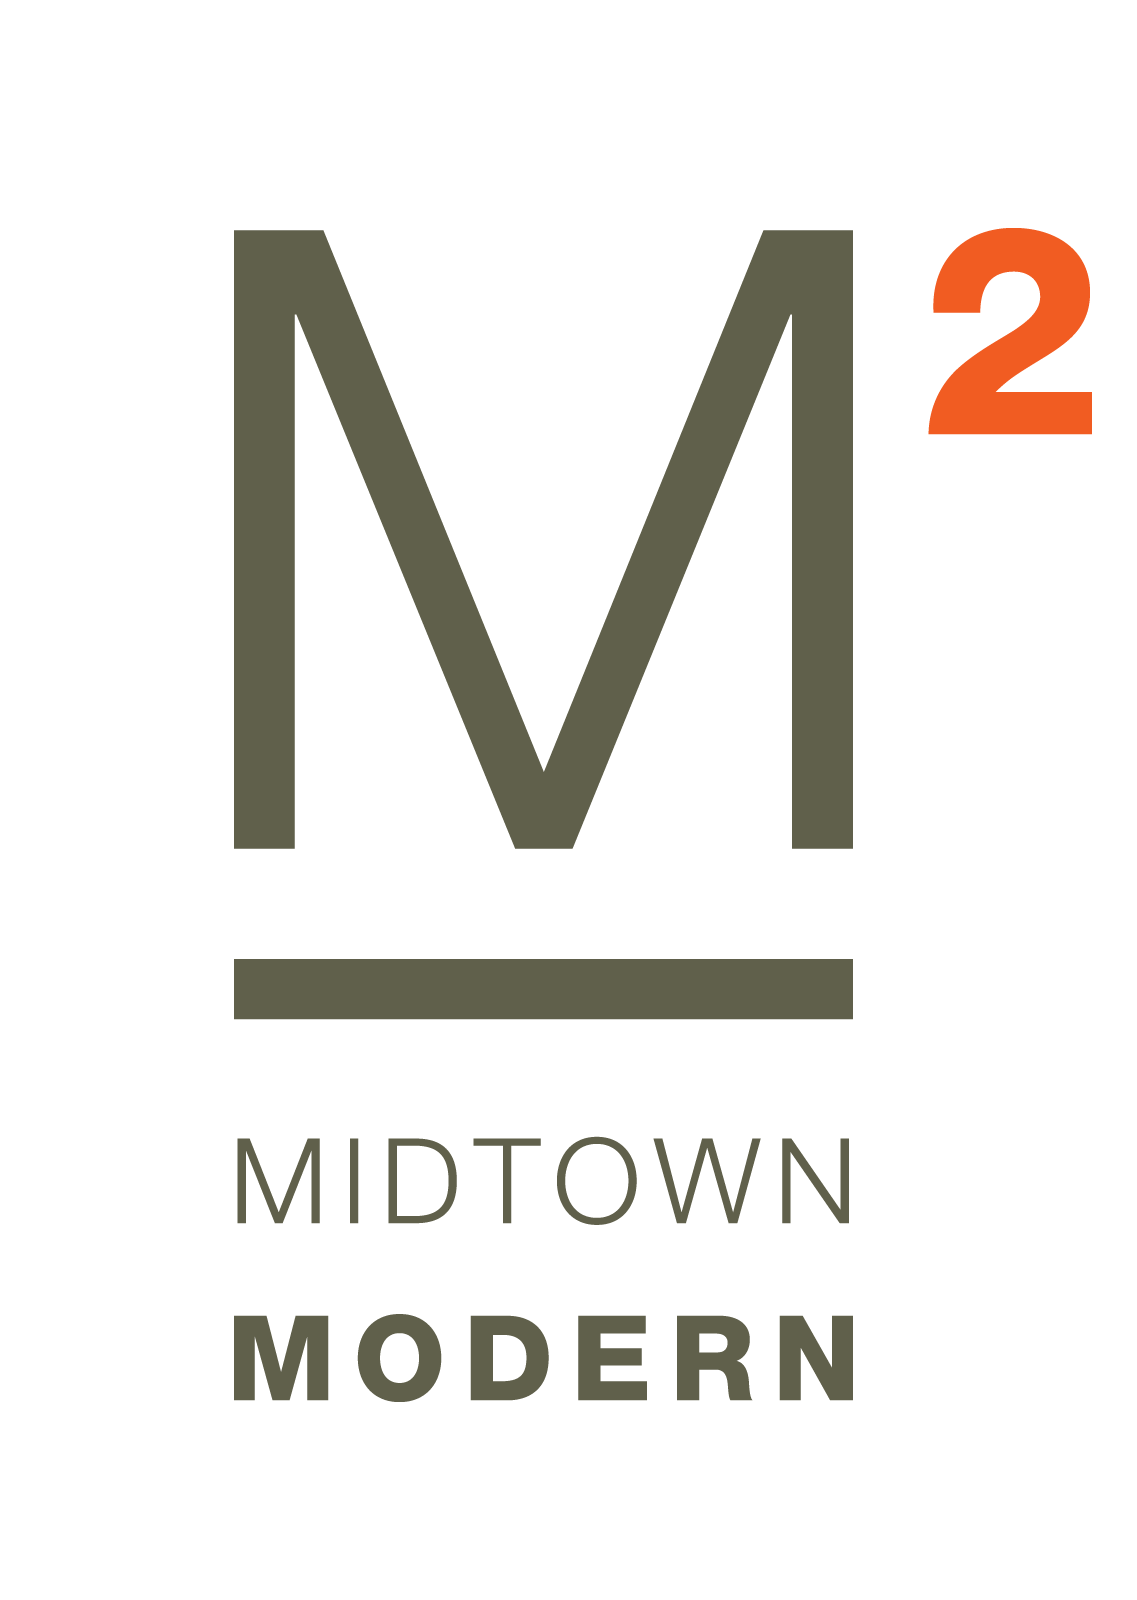 Midtown Modern